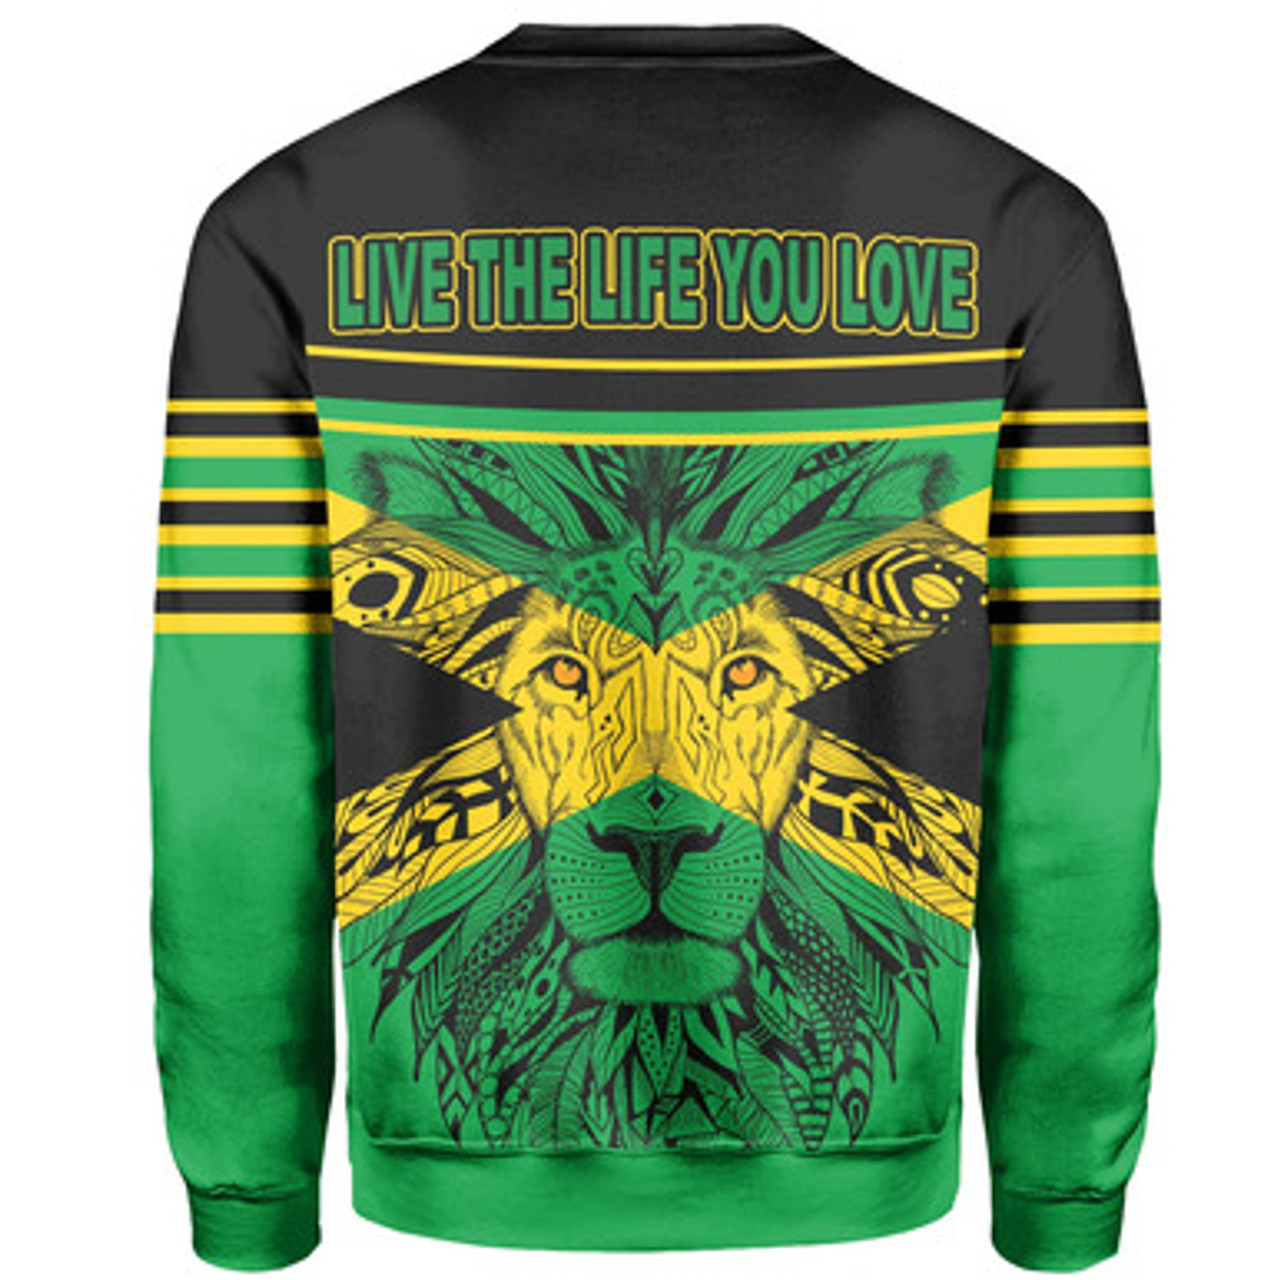 Jamaica Sweatshirt - African Patterns Lion King Life Style Sweatshirt